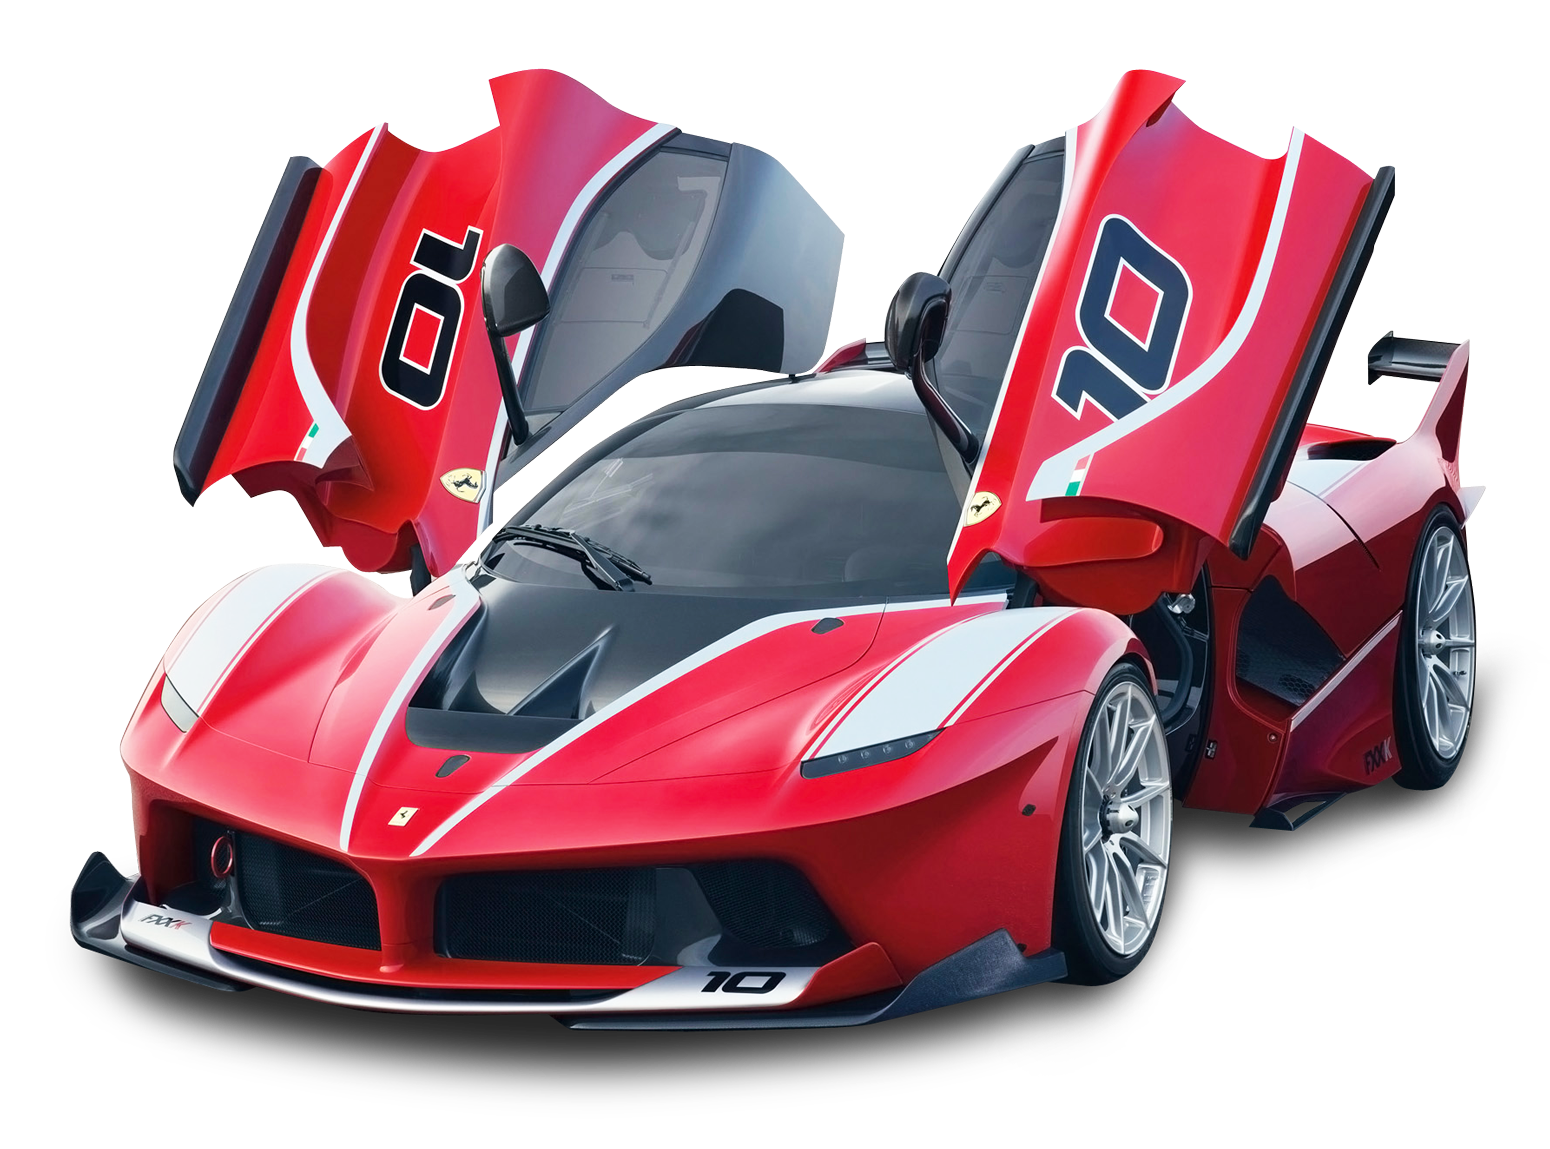 Red Ferrari FXX K Car